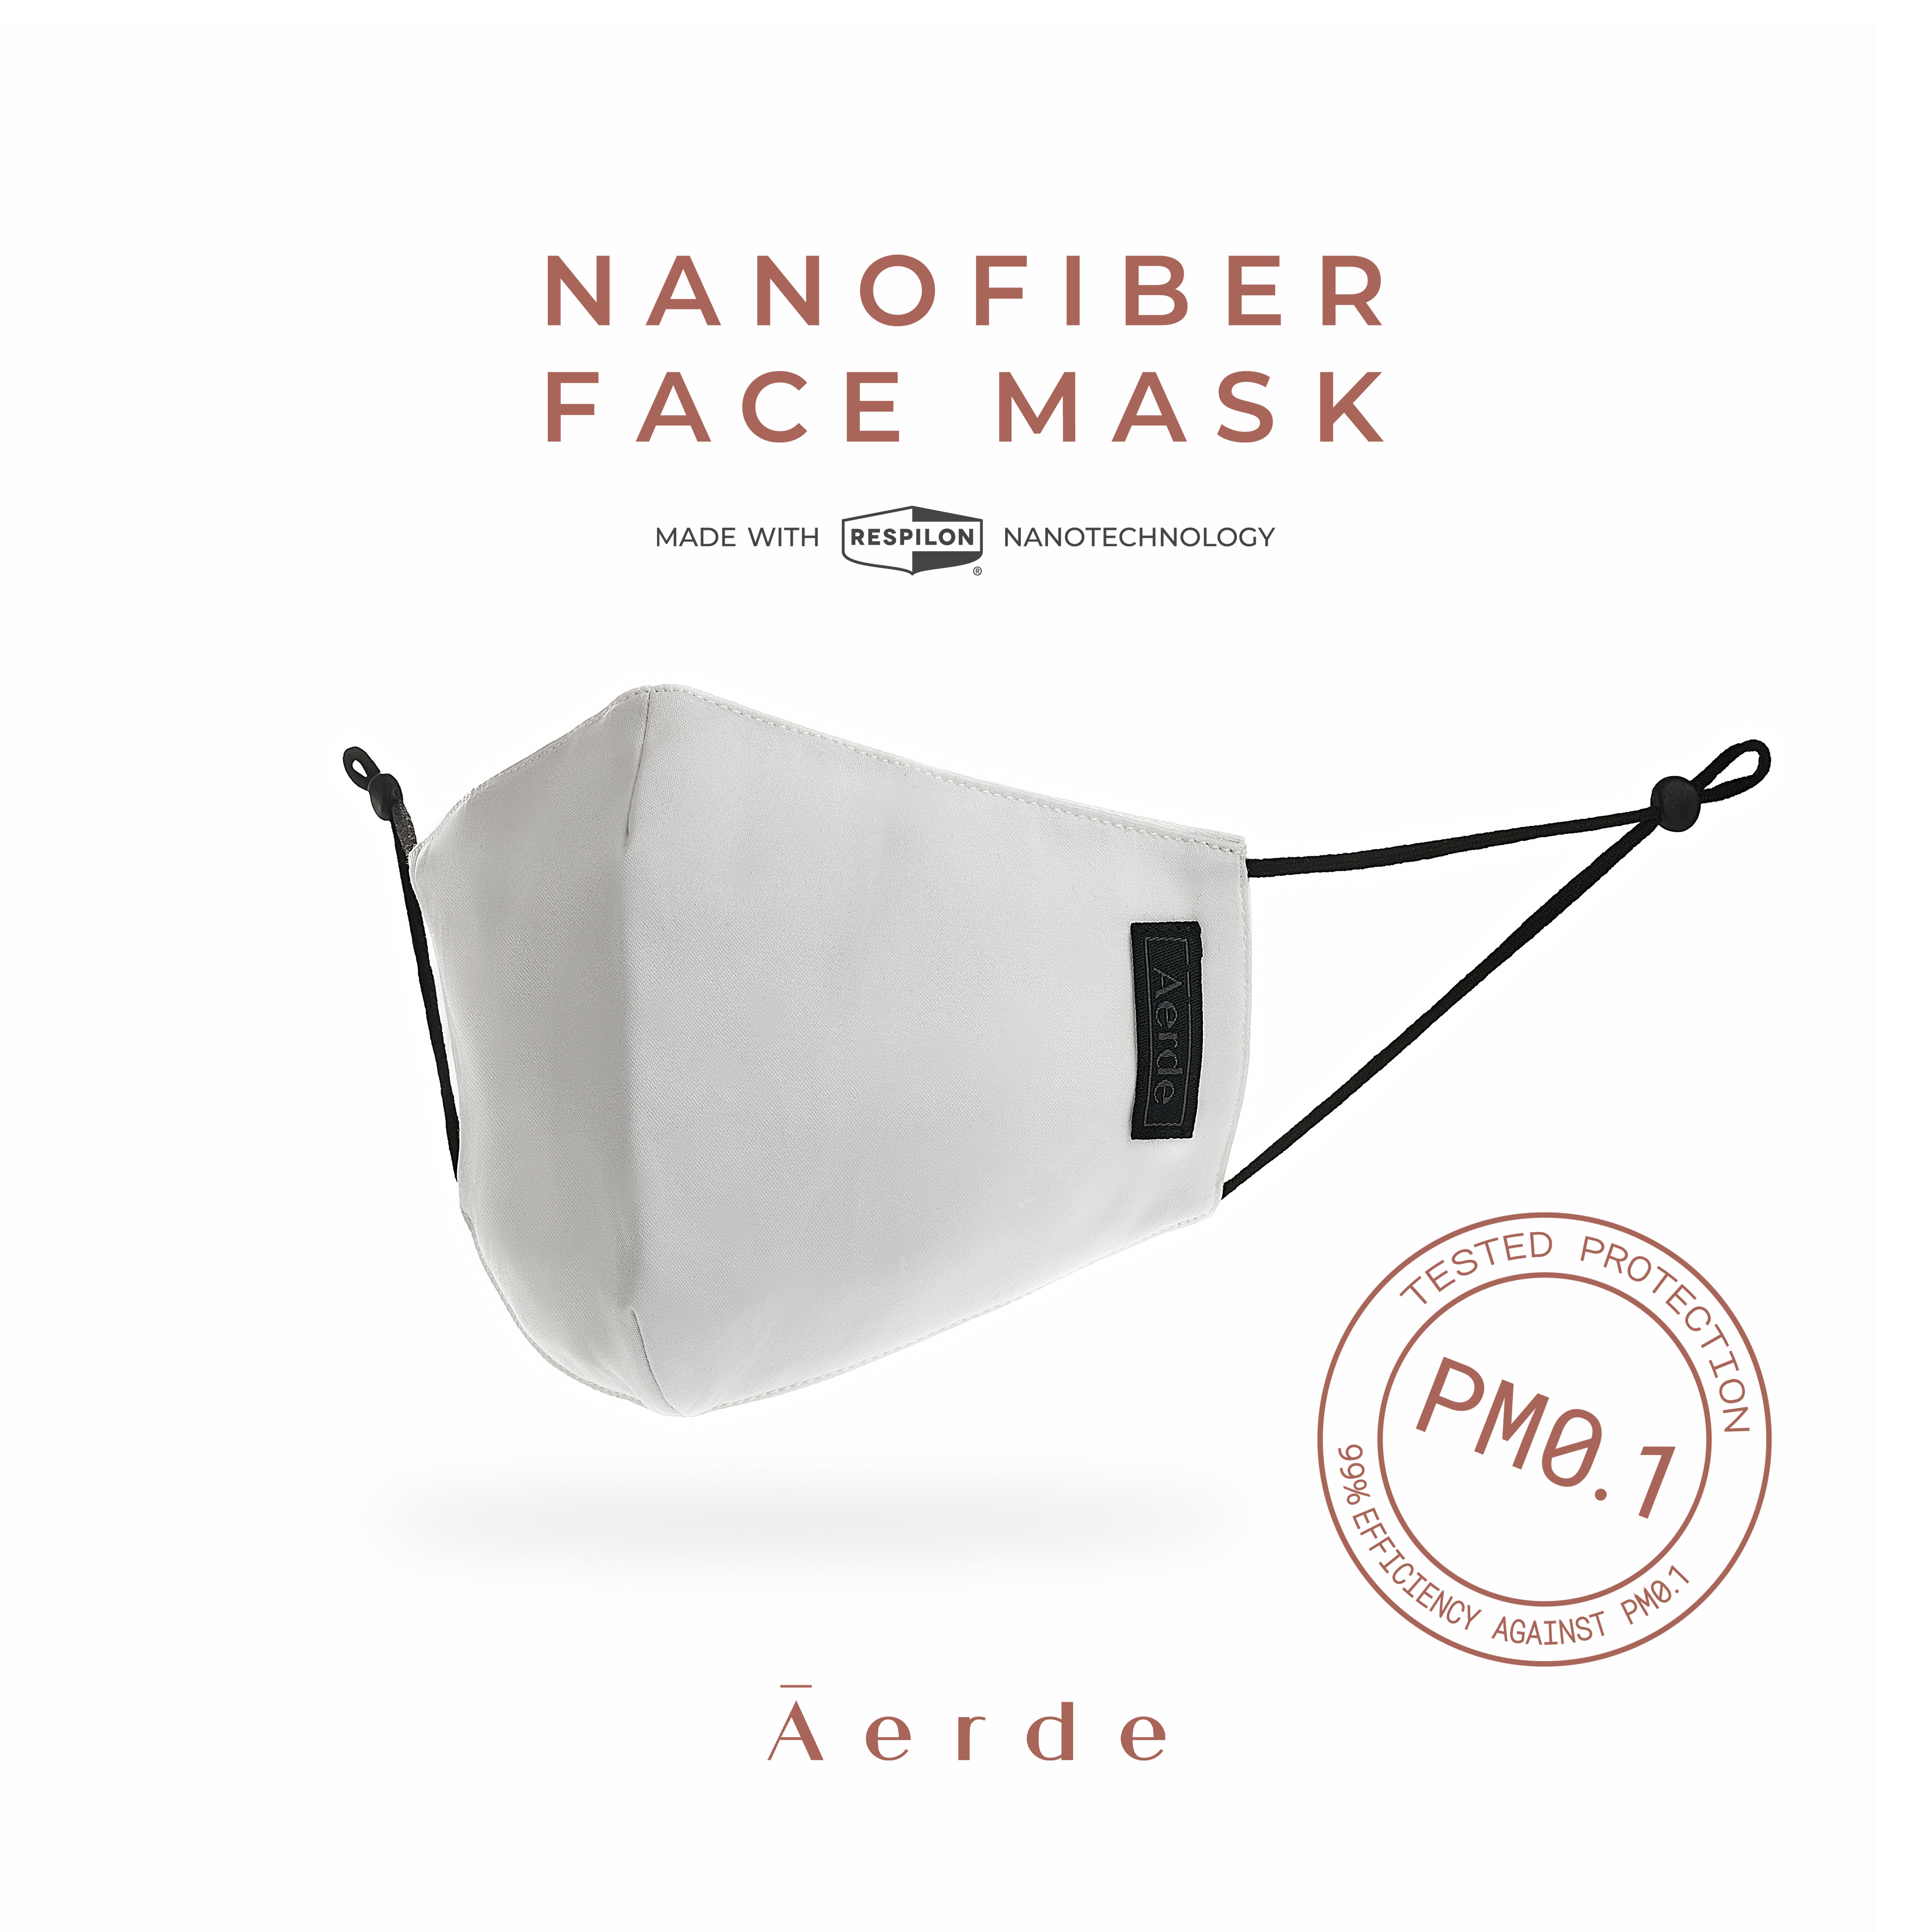 Nanofiber Face Mask — CMMN White by Āerde (แอร์เด้) • หน้ากากนาโนไฟเบอร์ • กรองฝุ่นละออง 99.9% PM0.1 • ยับยั้งไวรัสและแบคทีเรีย • สะท้อนน้ำ (ผ่านการทดสอบจาก Nelson Labs, USA)